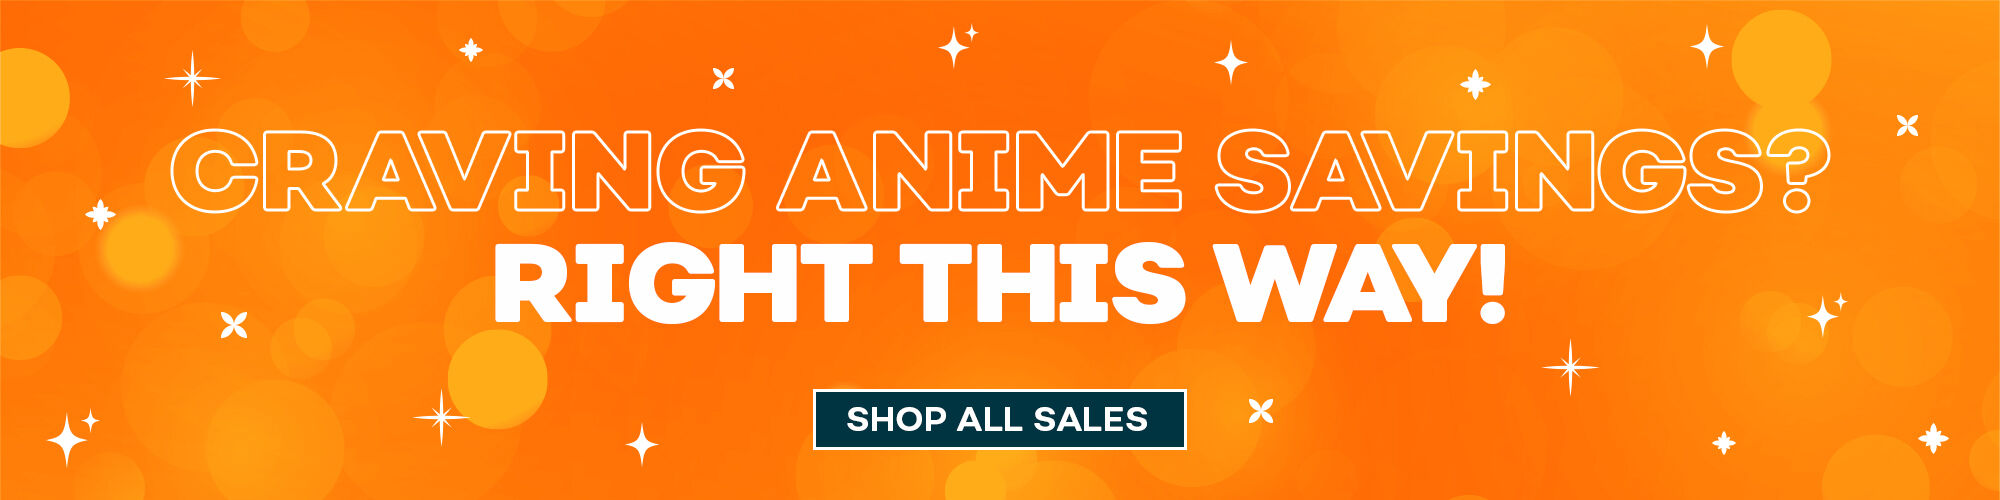  Craving Anime Savings? Right this Way!